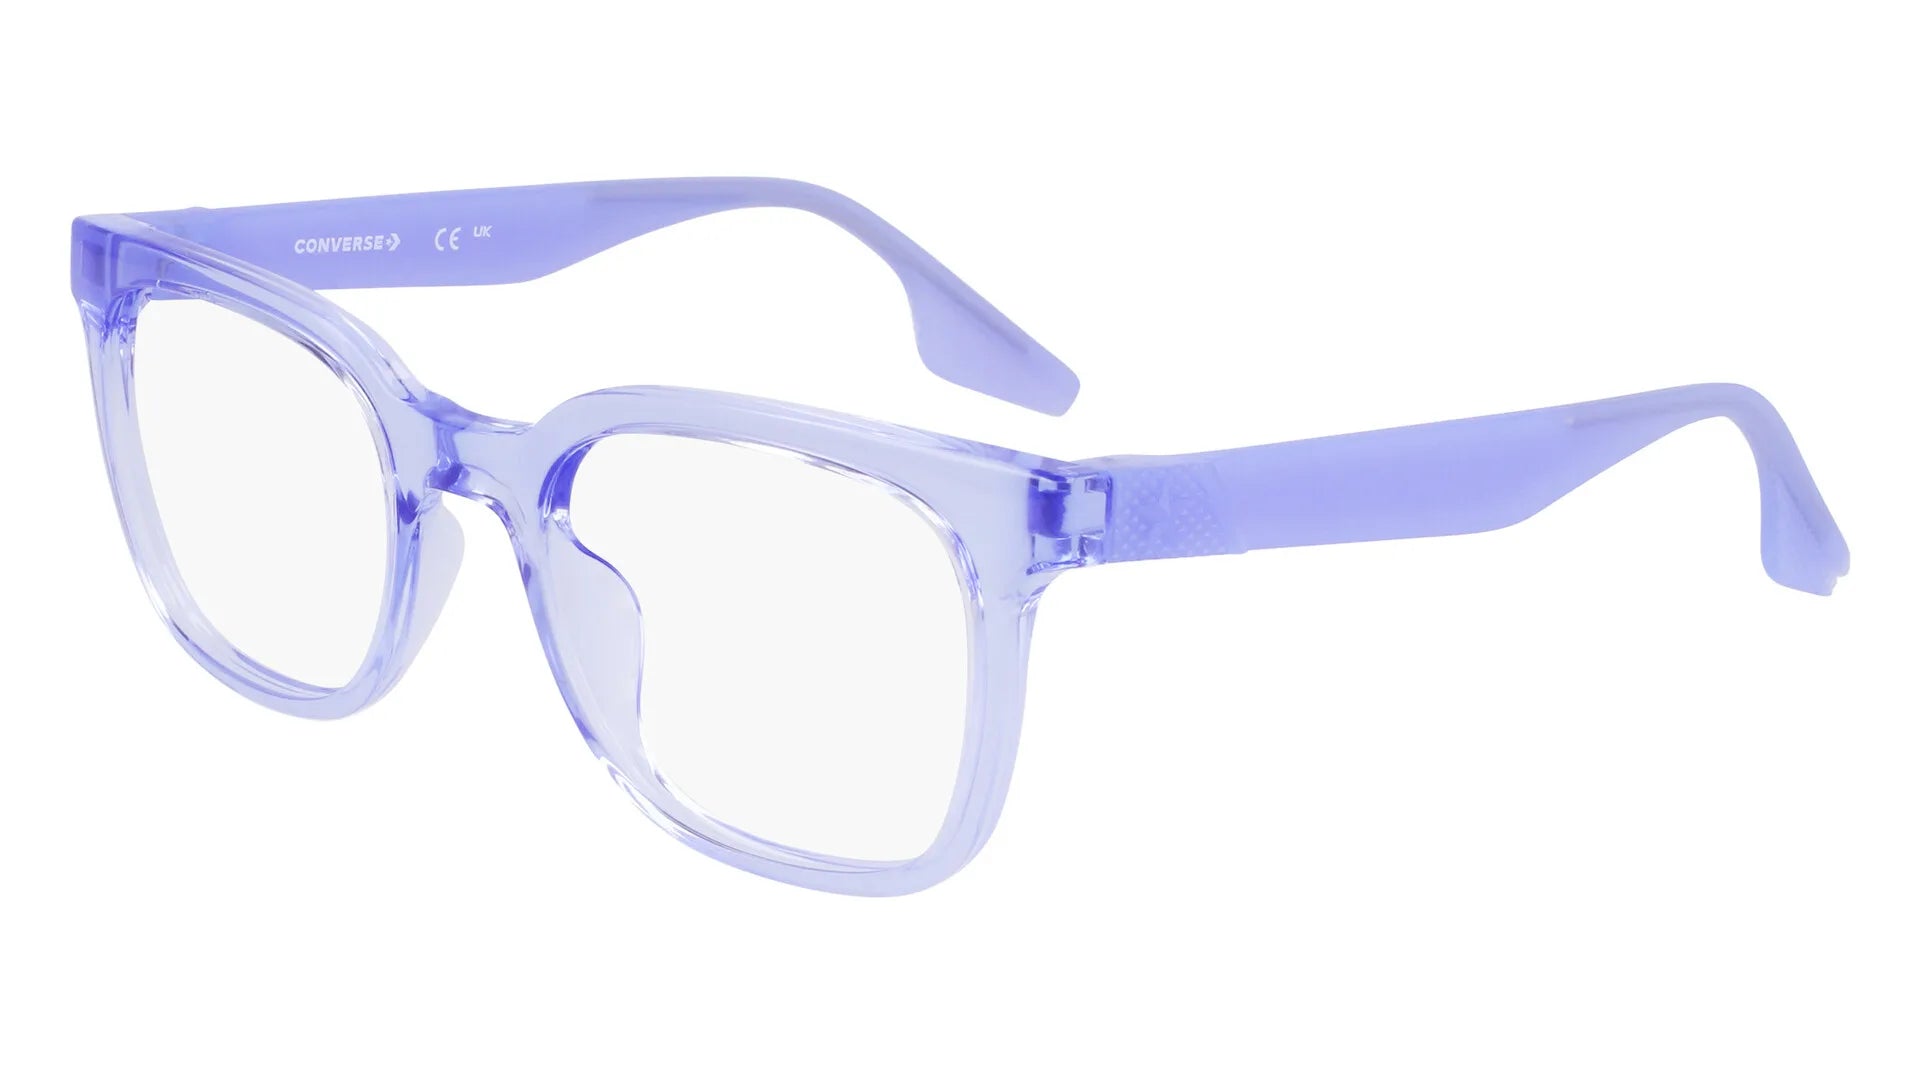 Converse CV5078 Eyeglasses Crystal Ultraviolet